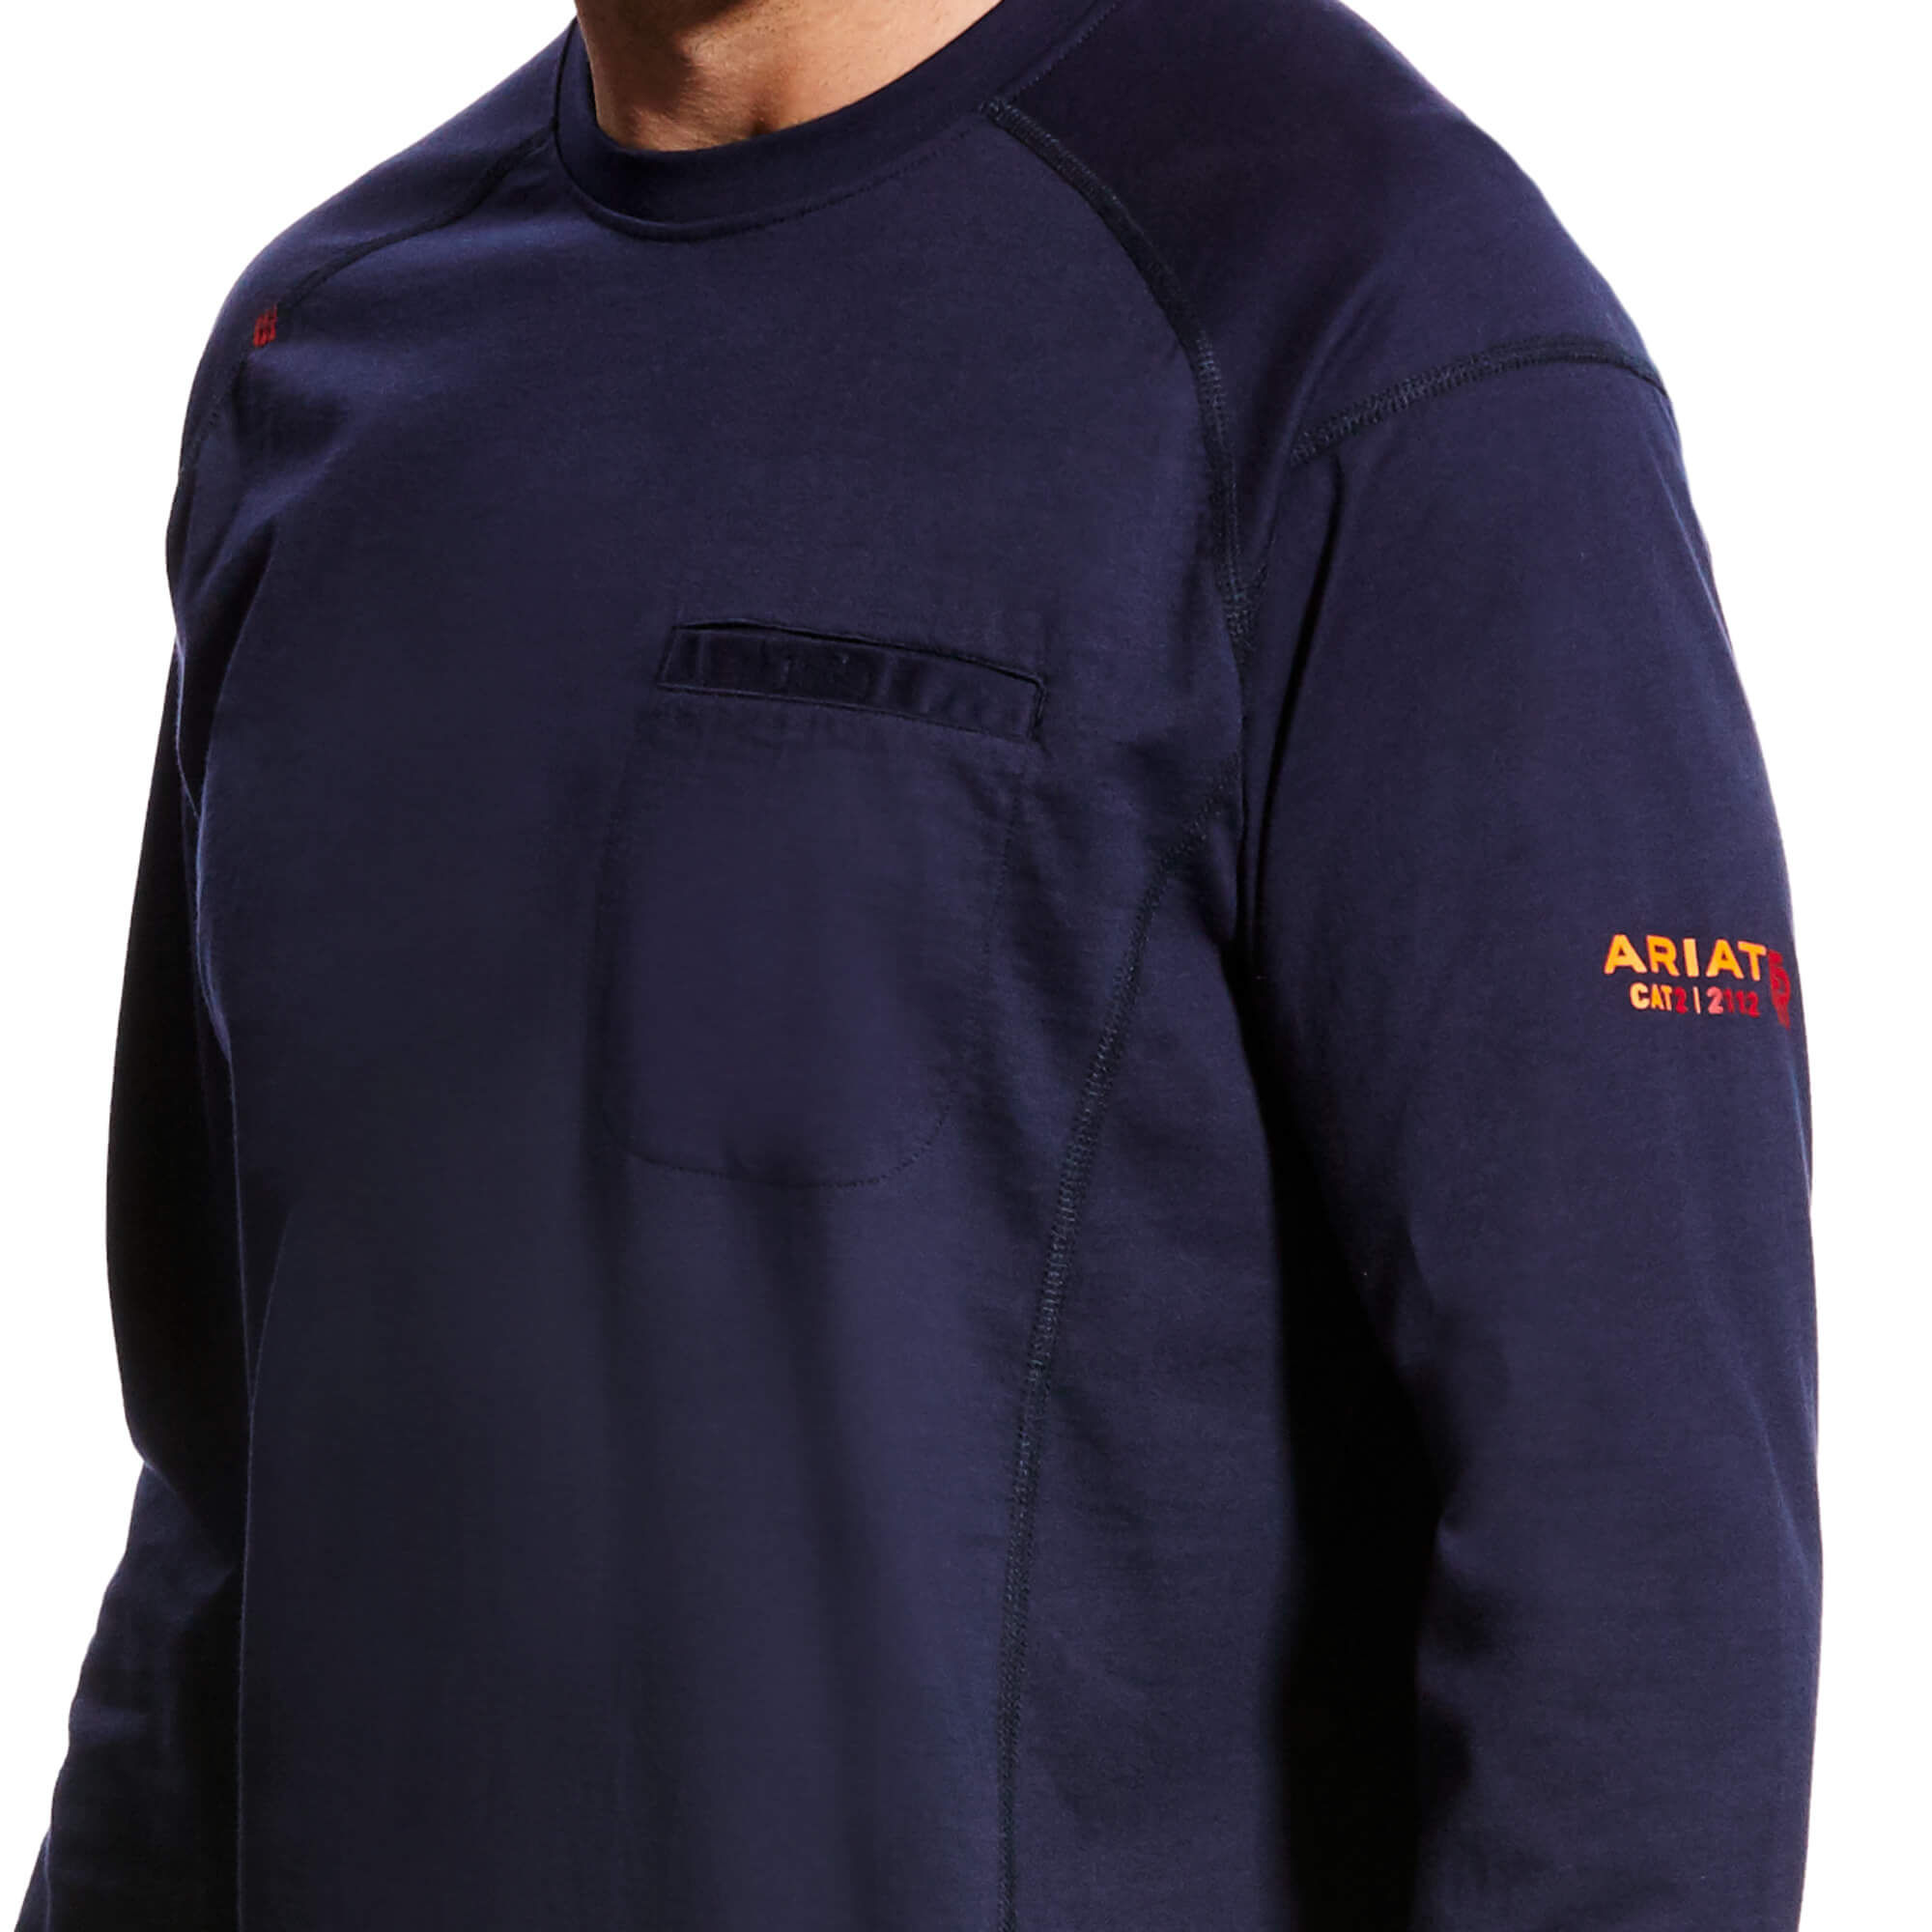 FR Air Crew T-Shirt | Ariat